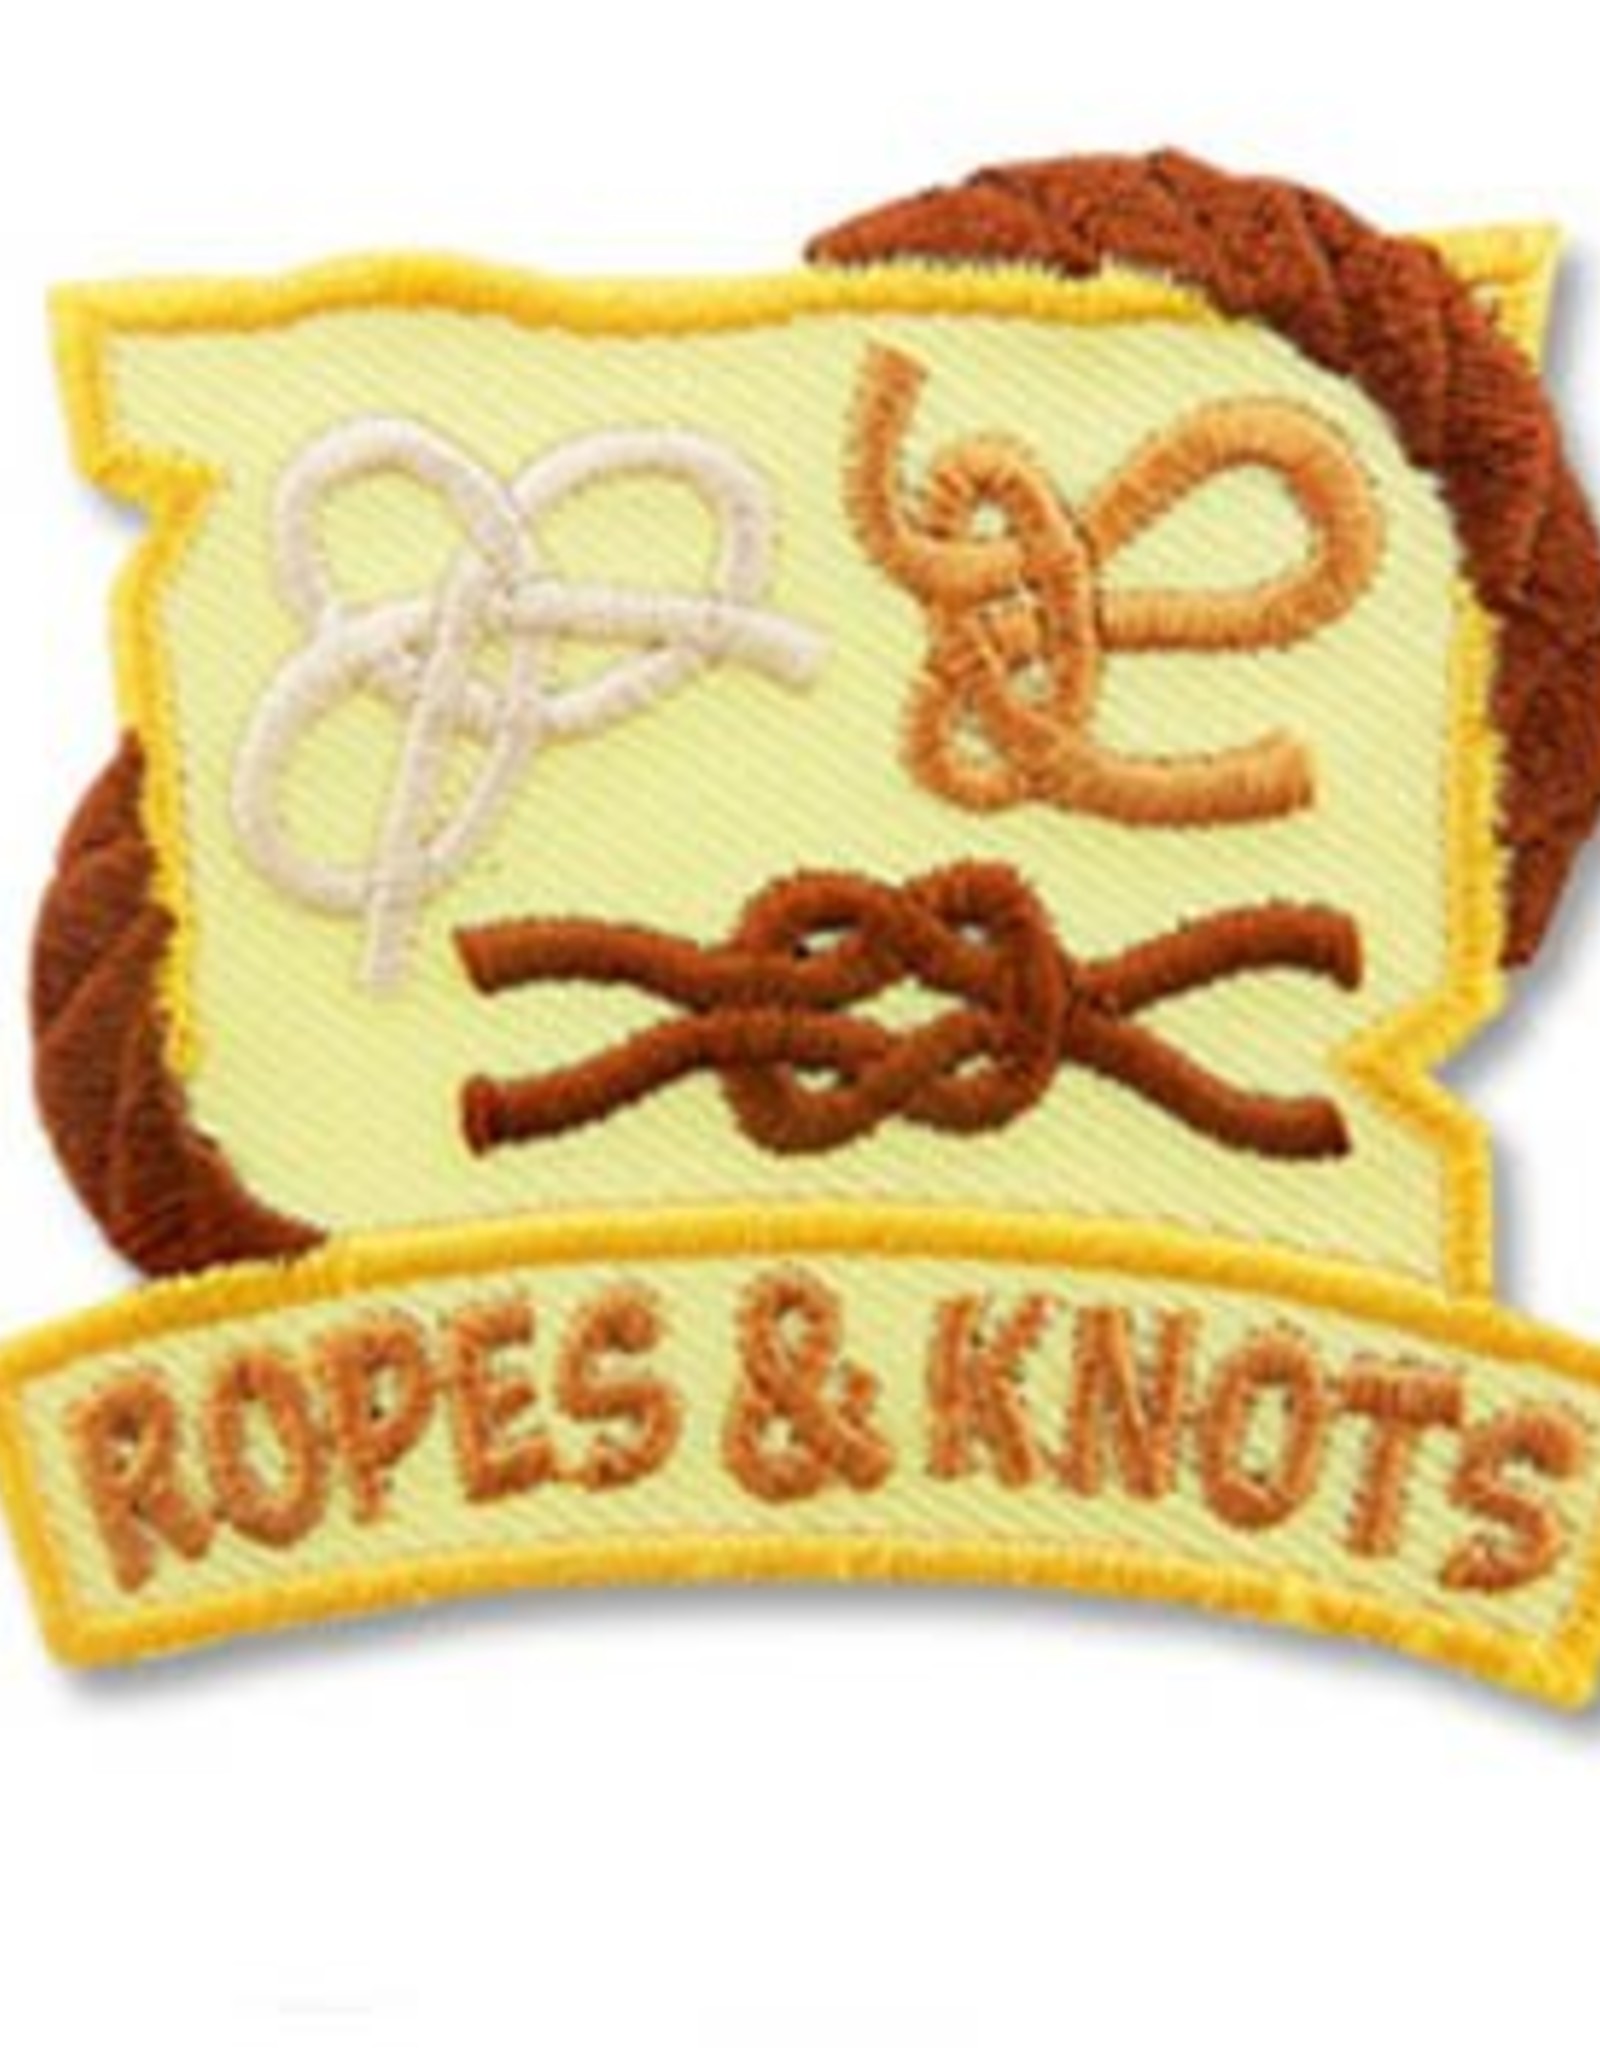 snappylogos Ropes & Knots Fun Patch (6236)